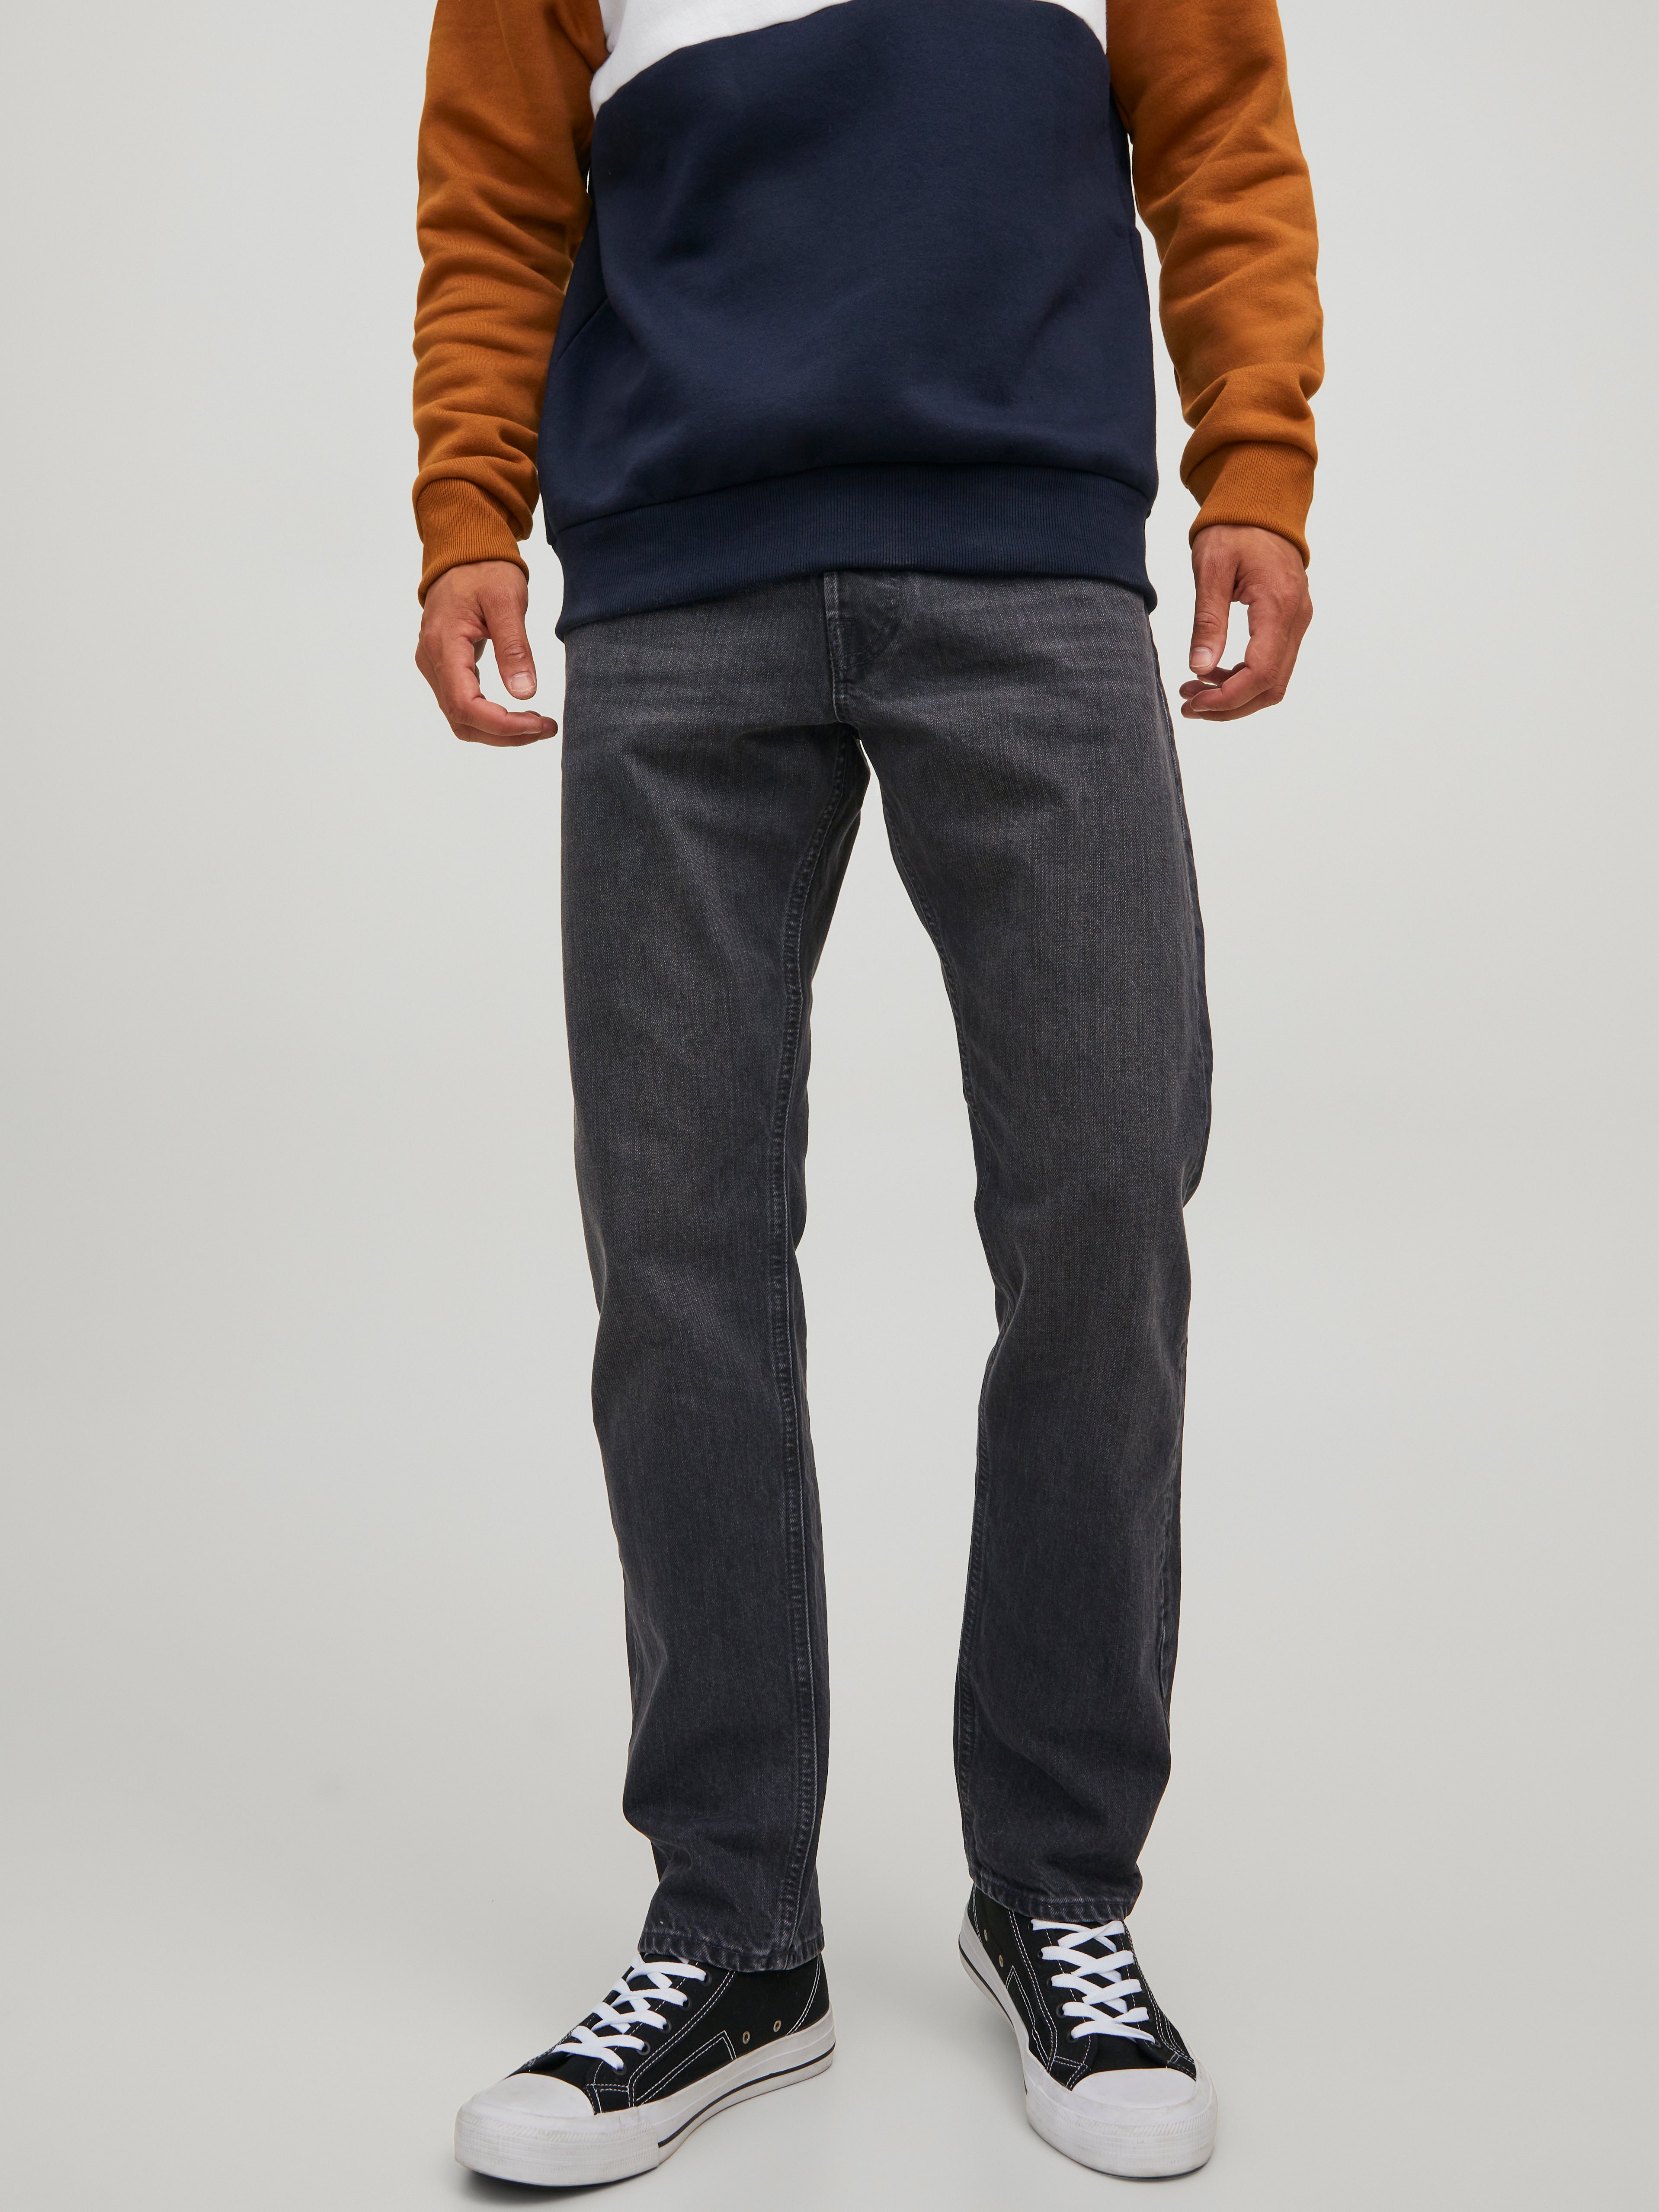 Chris Cooper JOS 490 Loose fit jeans | Black | Jack & Jones®